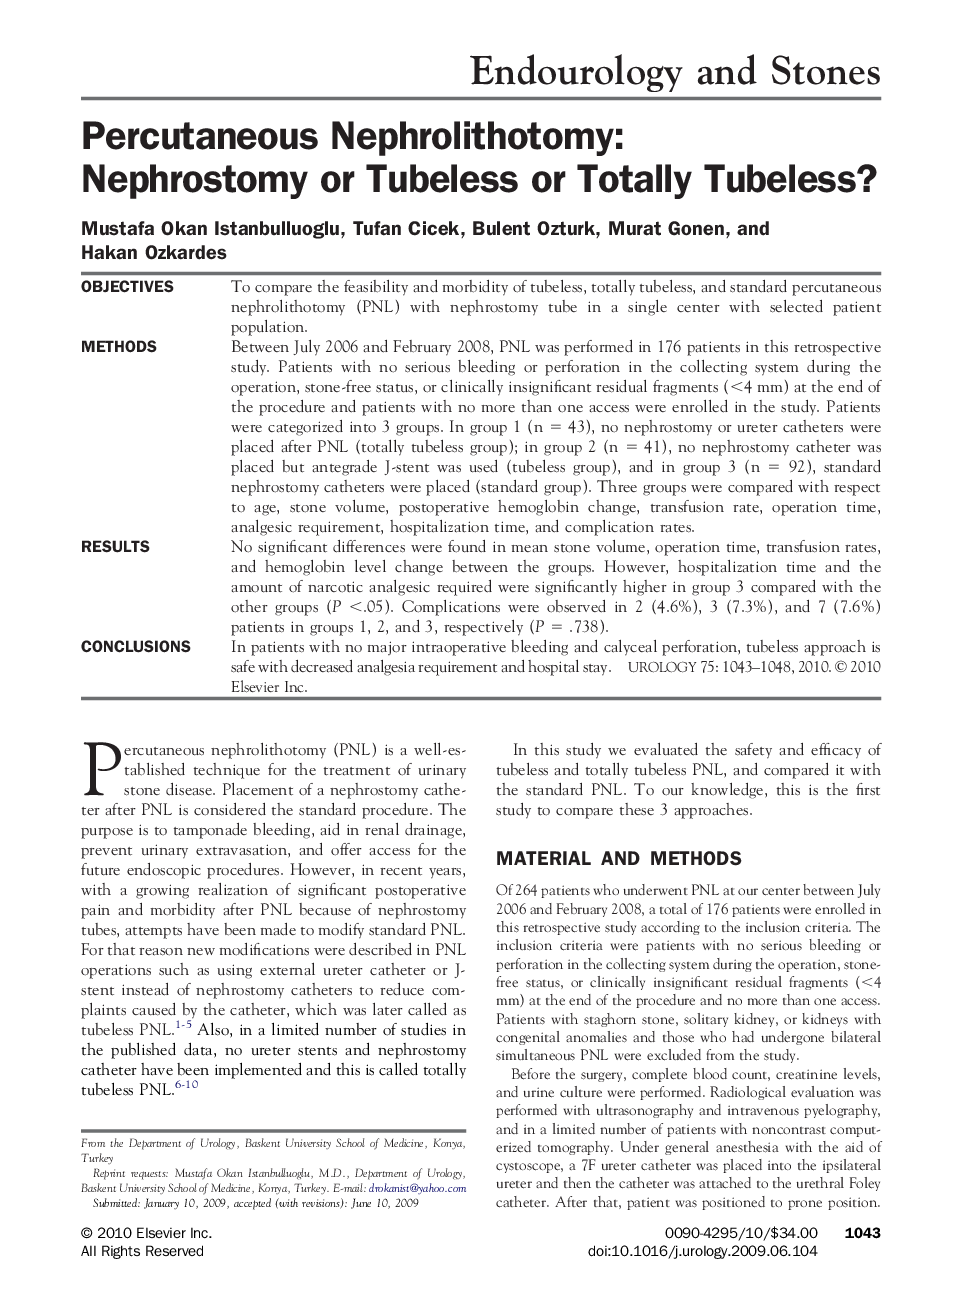 Percutaneous Nephrolithotomy: Nephrostomy or Tubeless or Totally Tubeless?